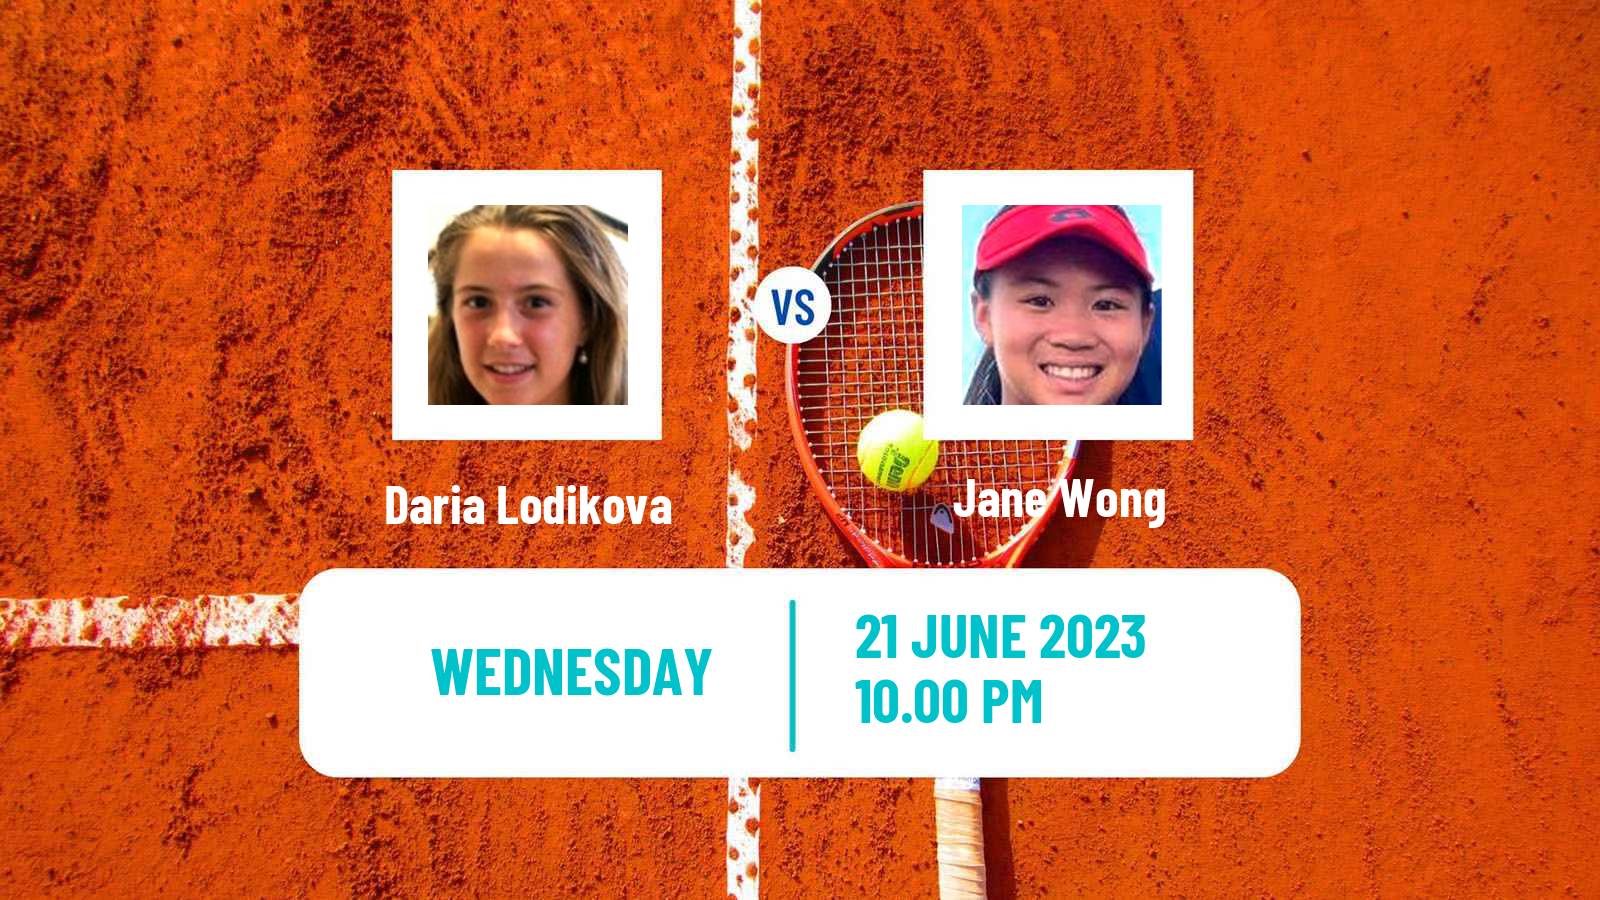 Tennis ITF W25 Tainan 2 Women Daria Lodikova - Jane Wong